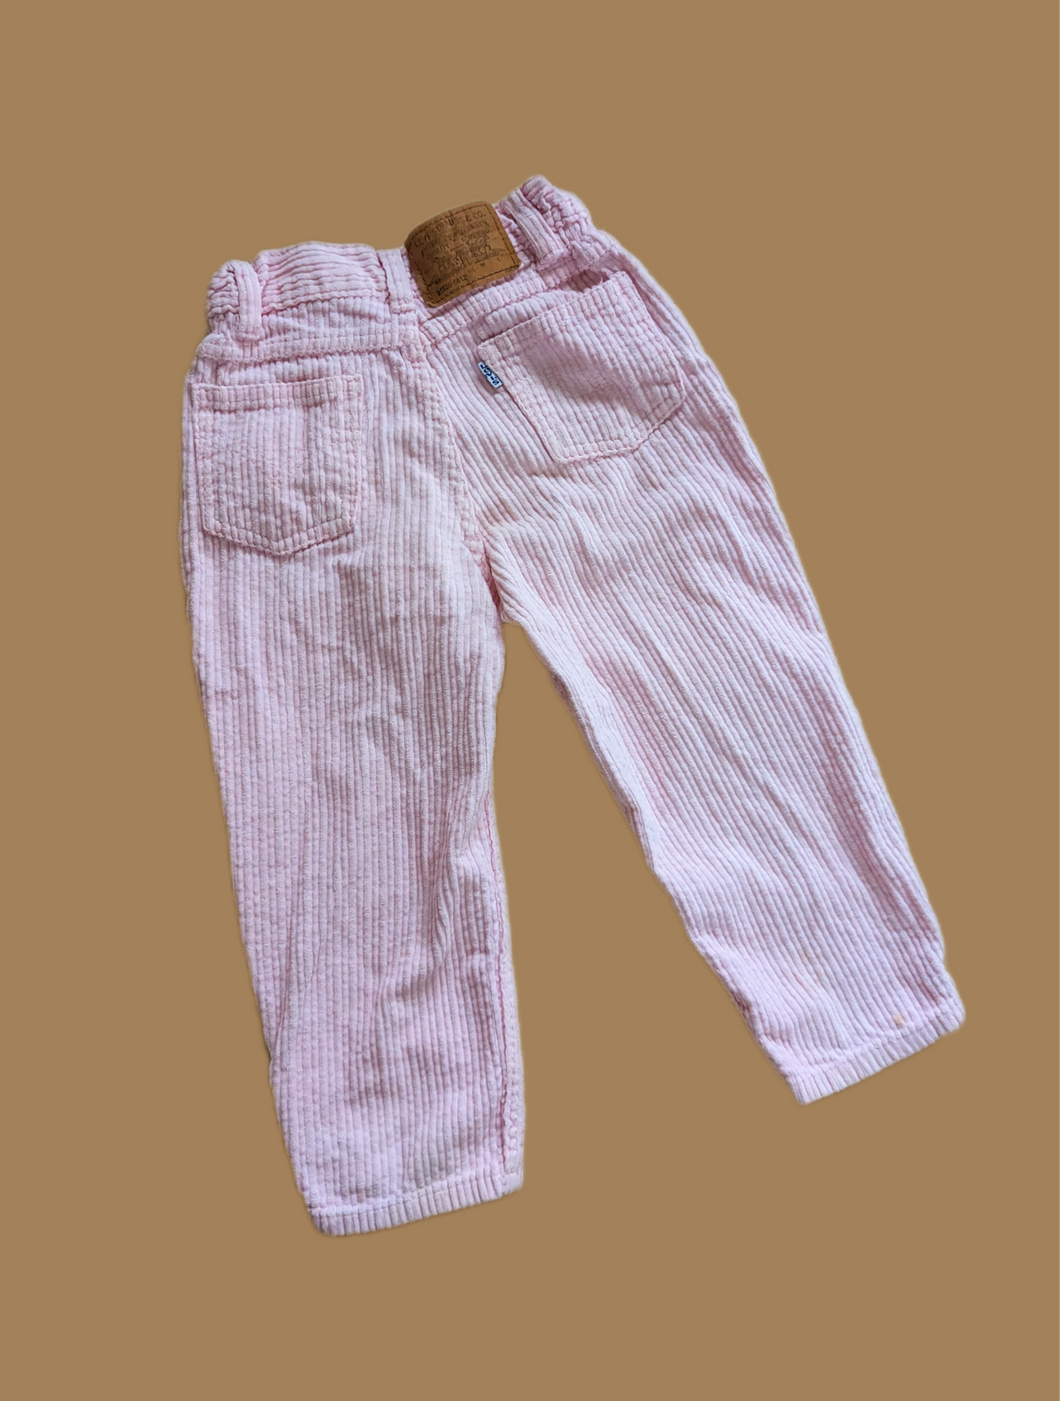 Levi's Pink Corduroy Pants 4t